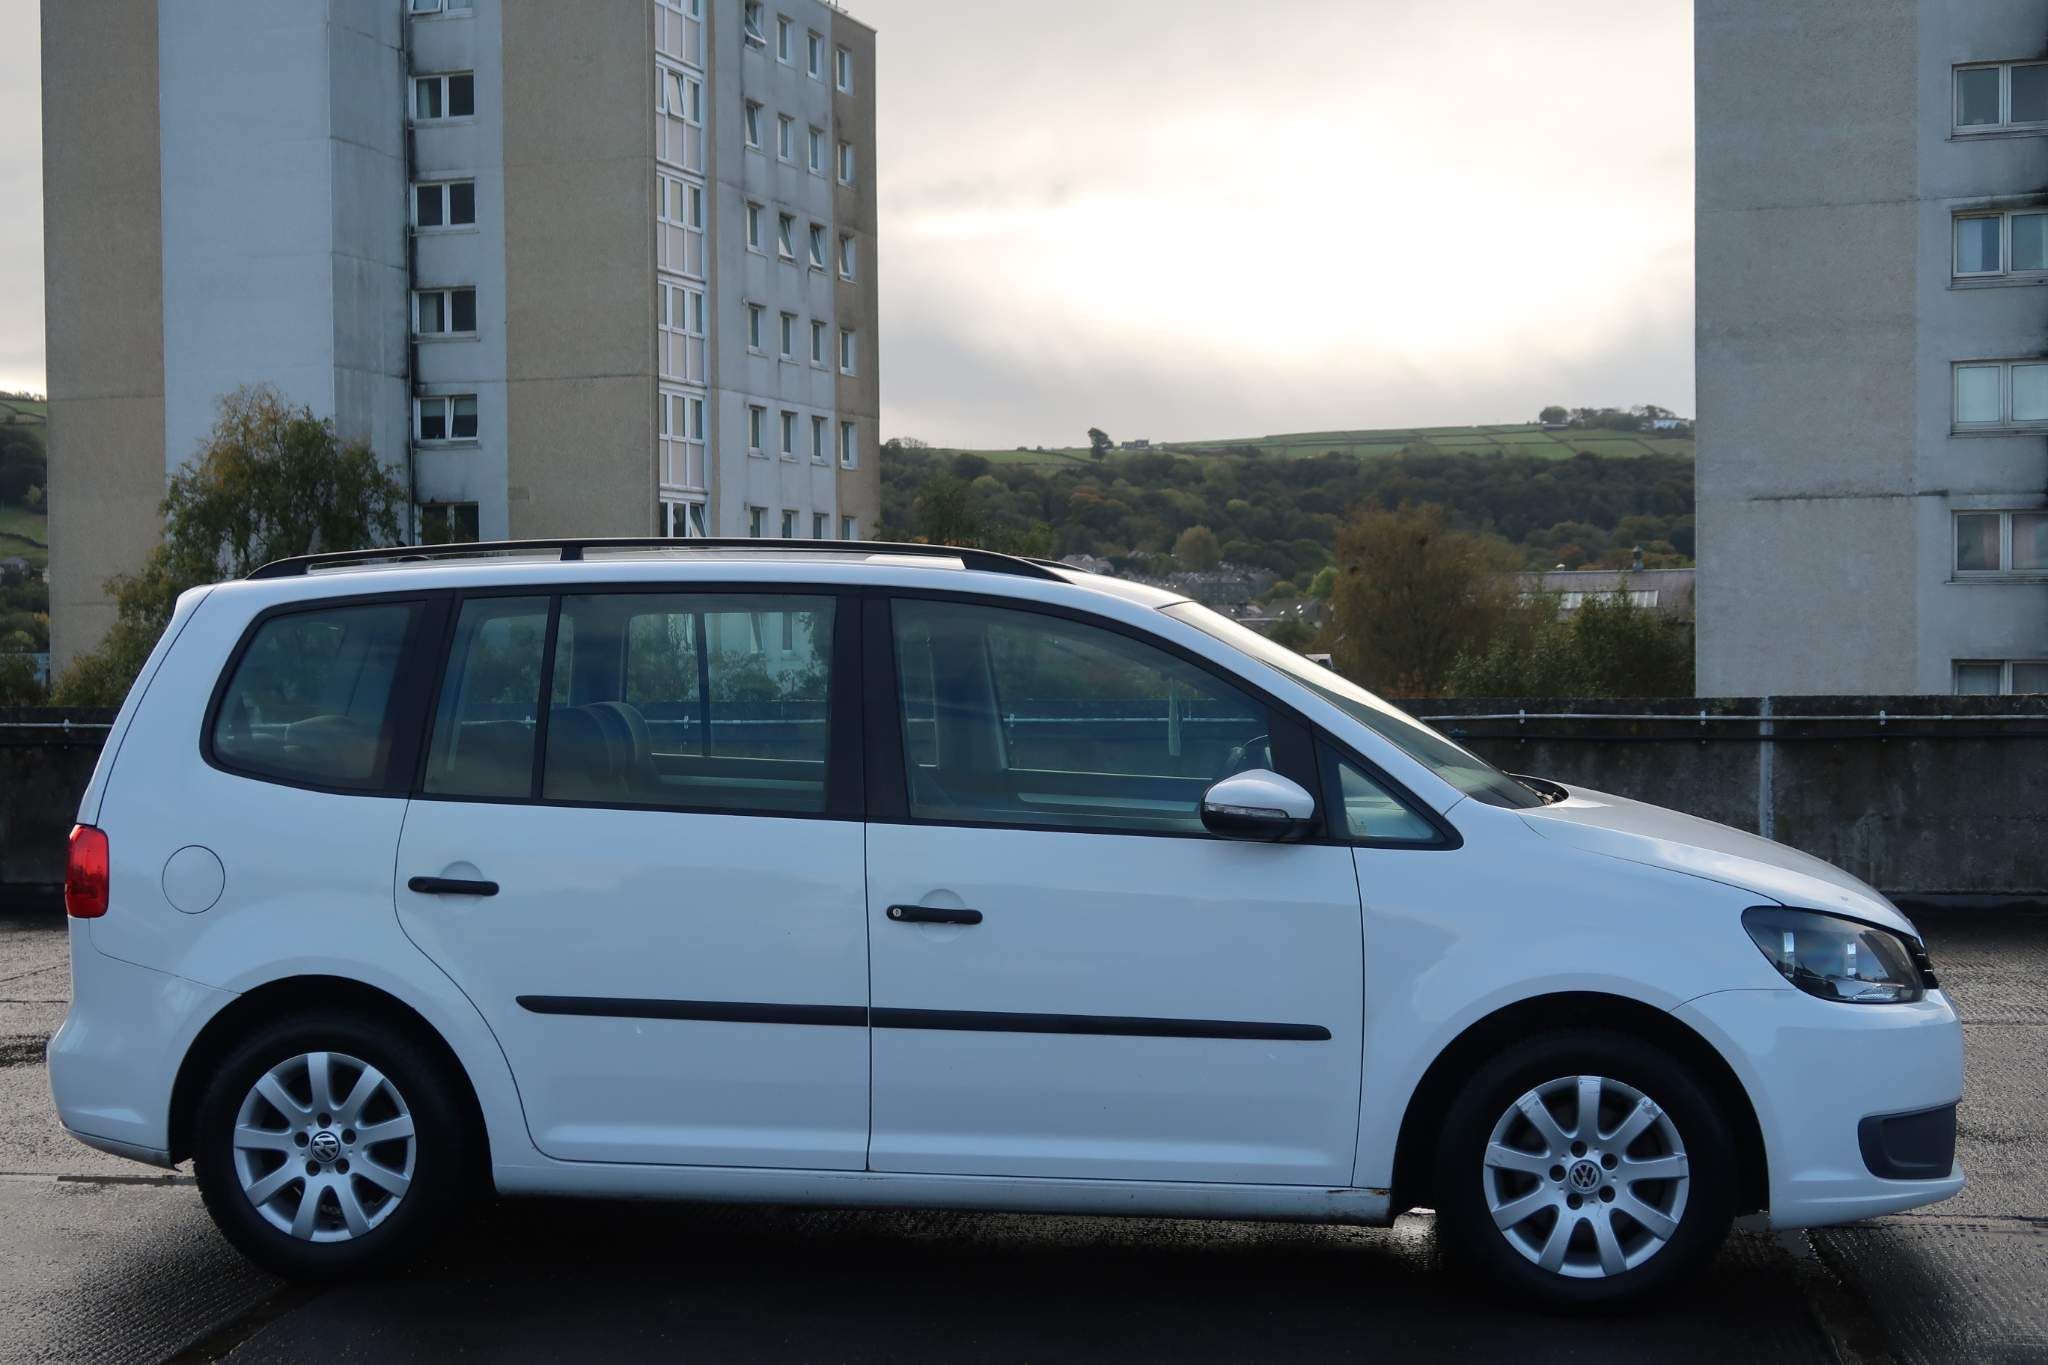 Used Volkswagen Touran Review - 2003-2015